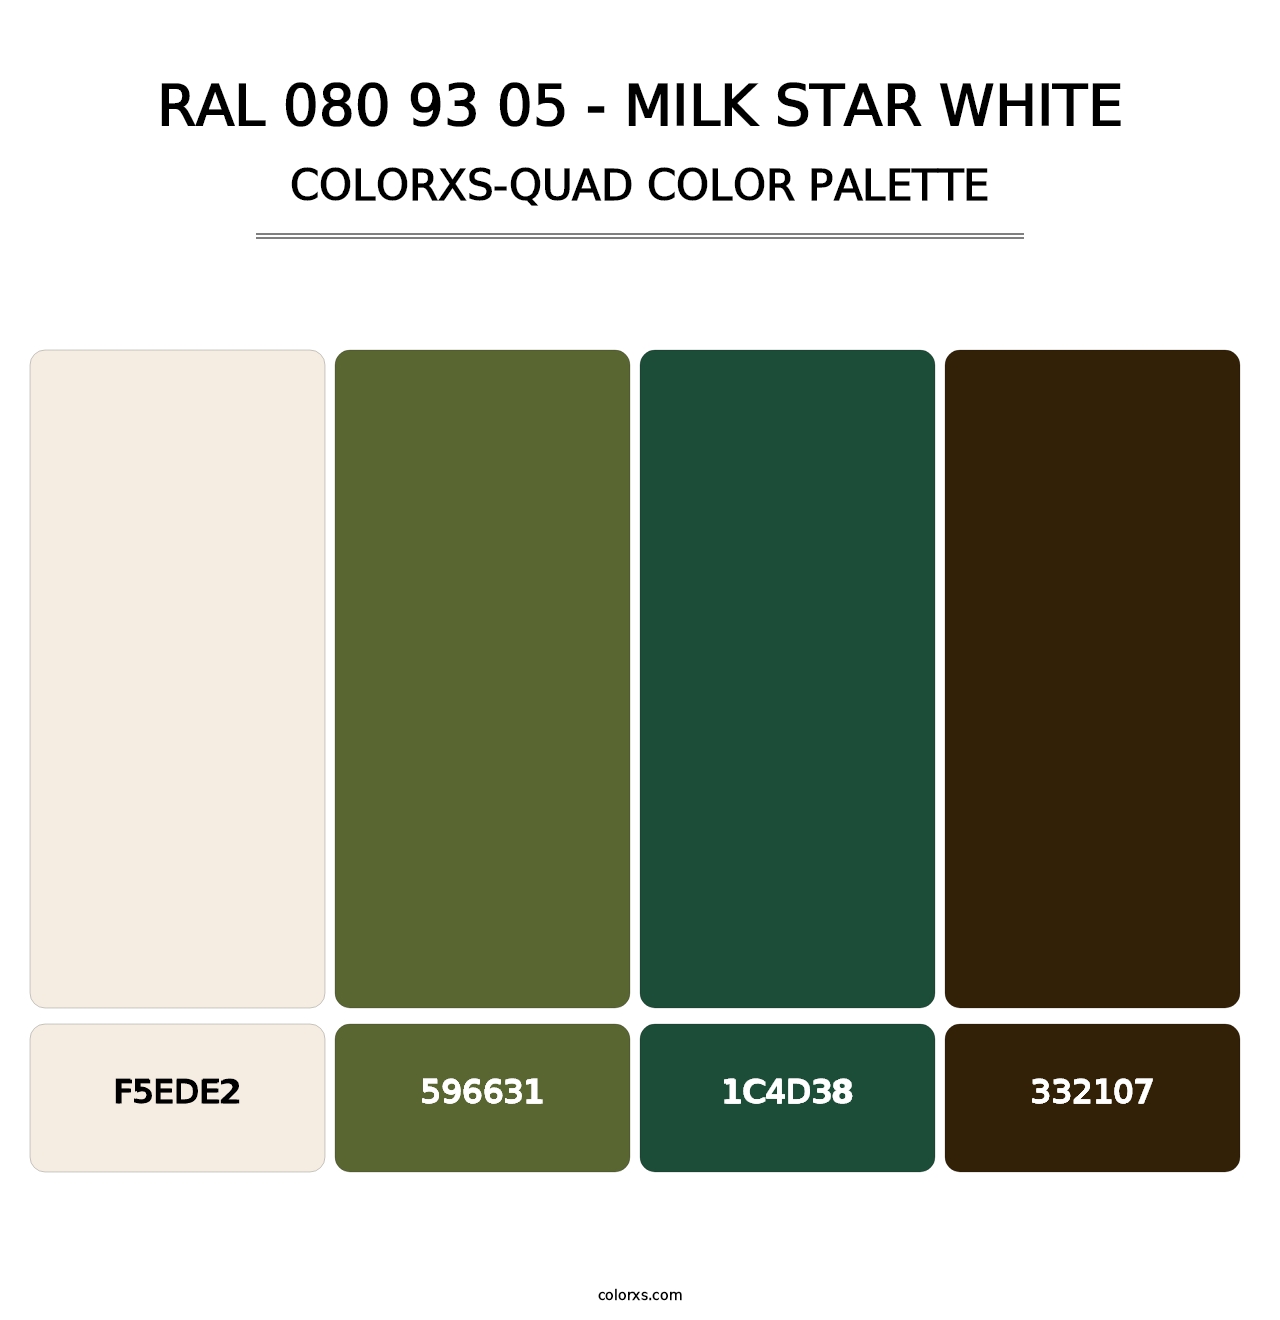 RAL 080 93 05 - Milk Star White - Colorxs Quad Palette